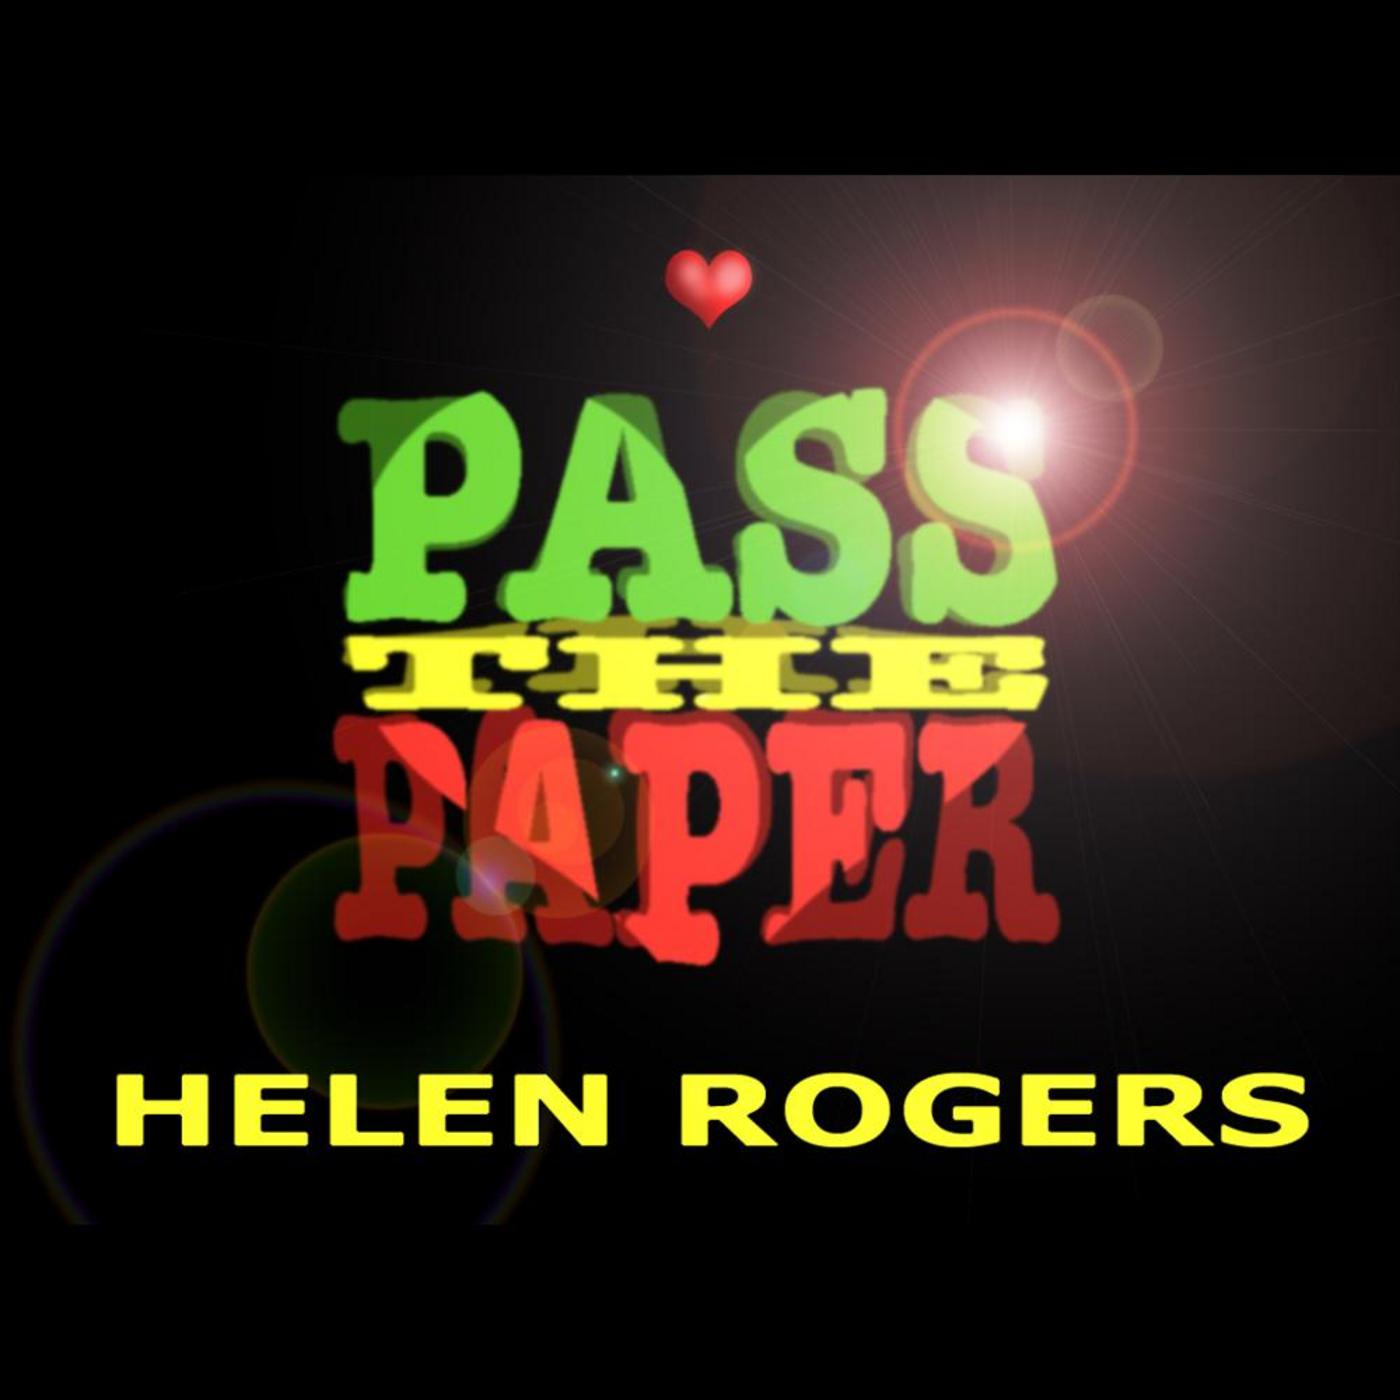 Helen rogers